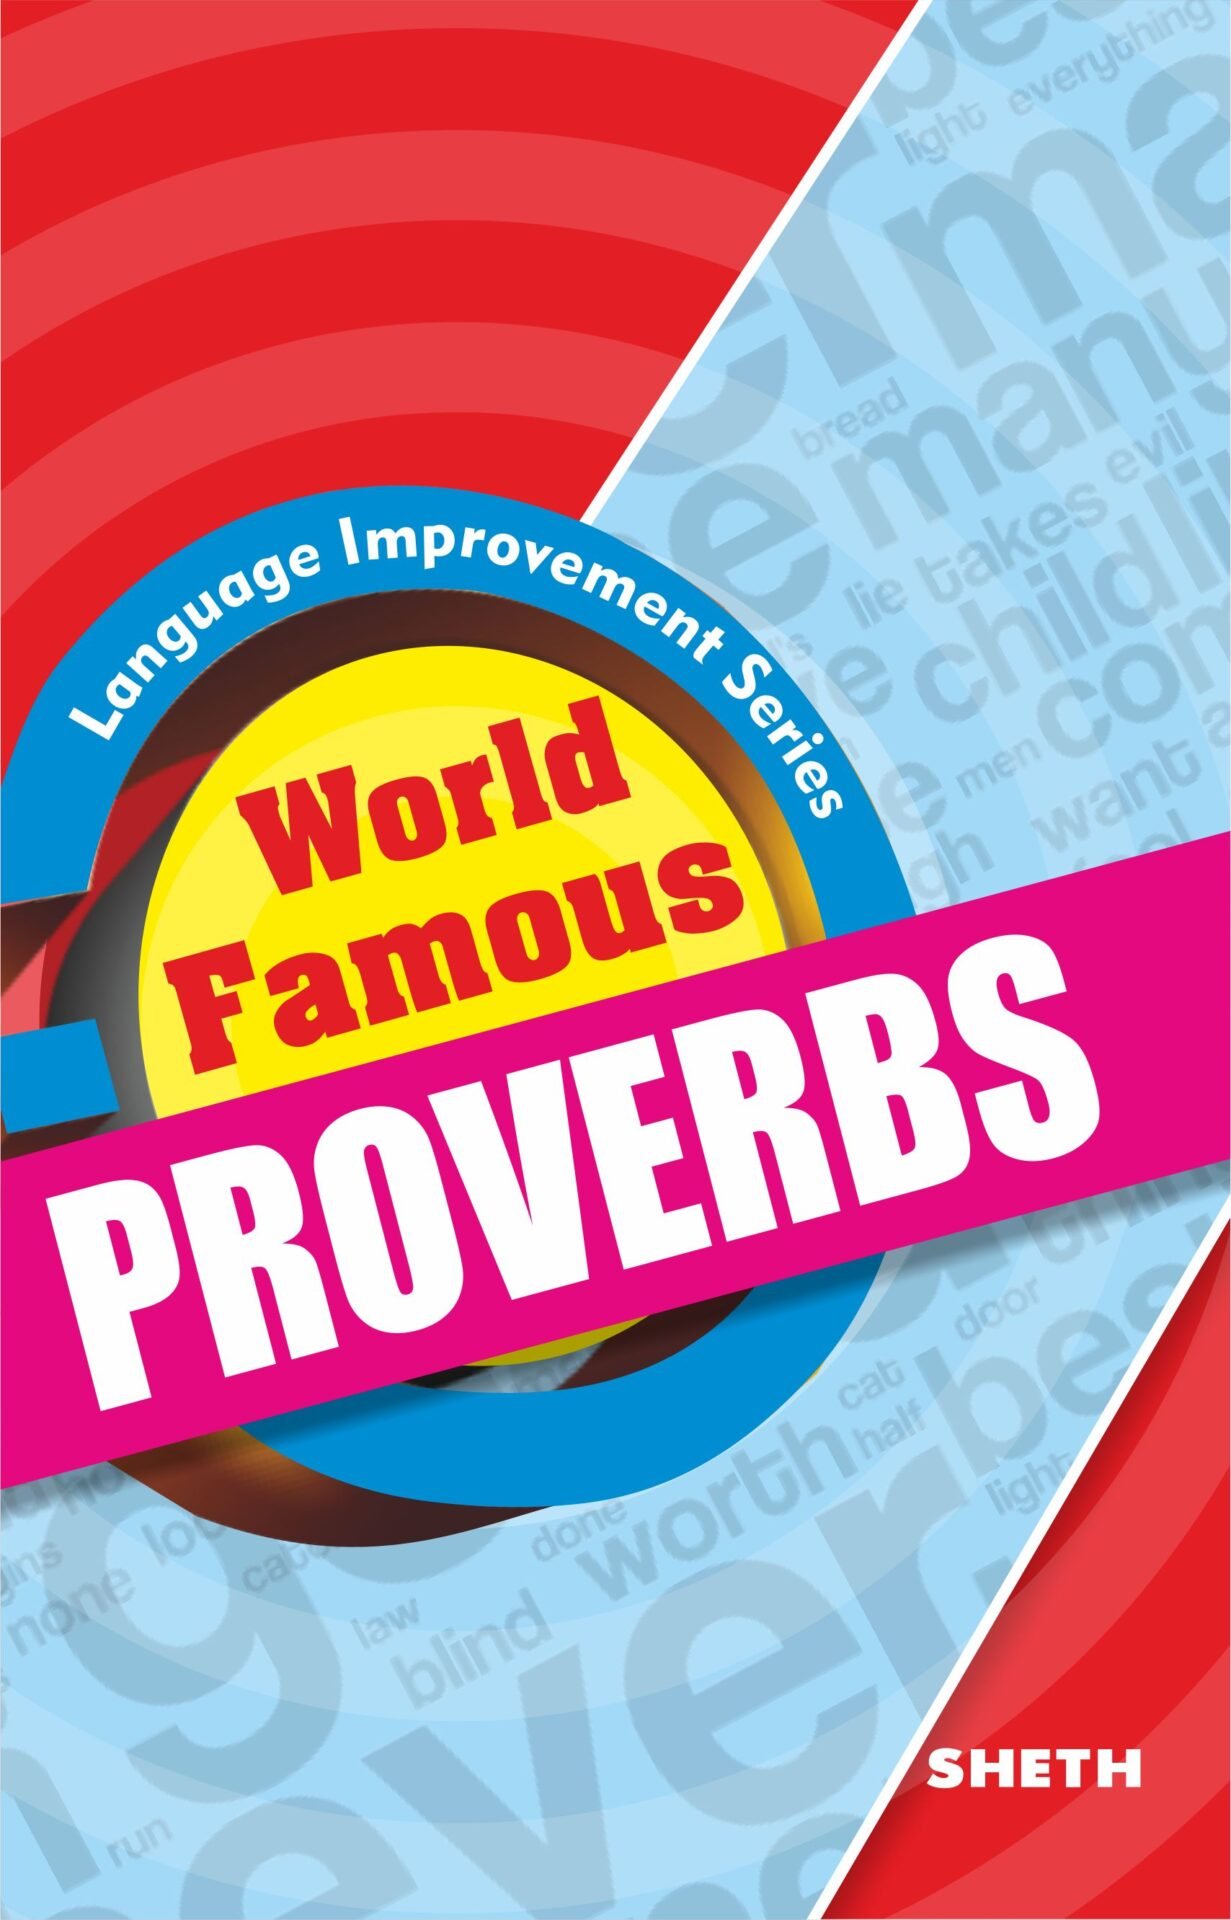 Sheth Books World Famous Proverbs 1